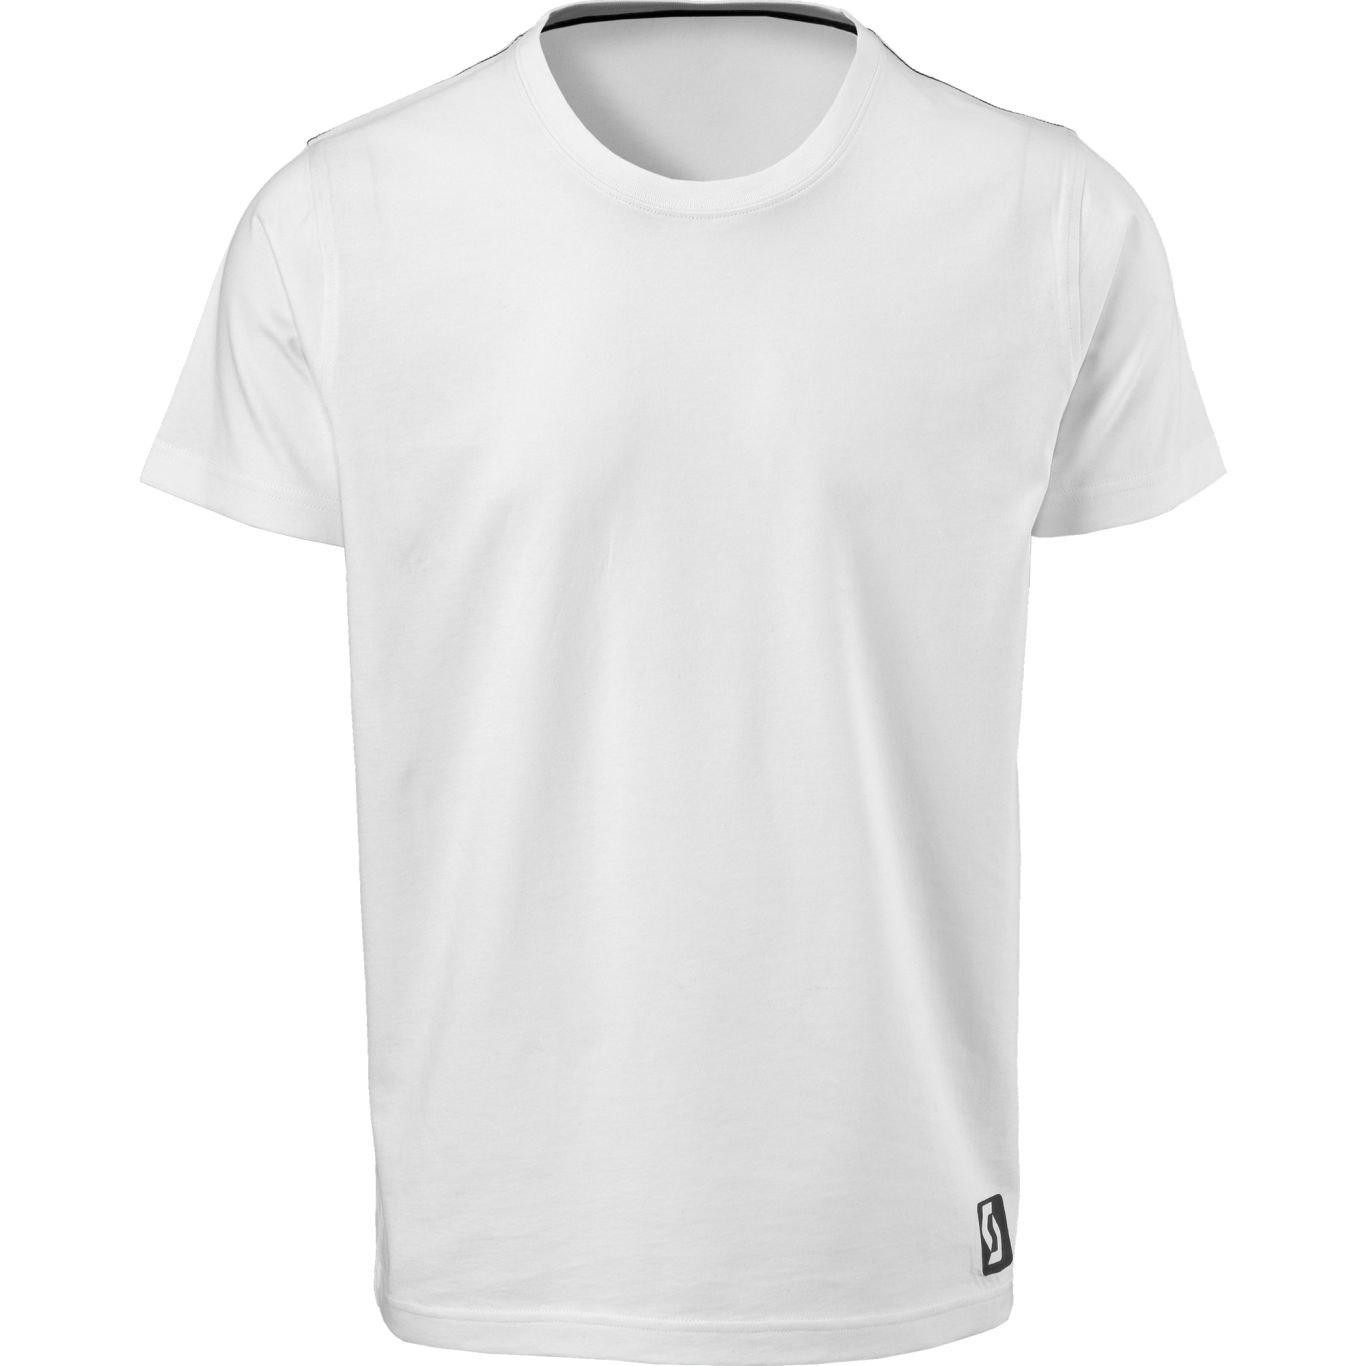 White T-shirt PNG image    图片编号:5434